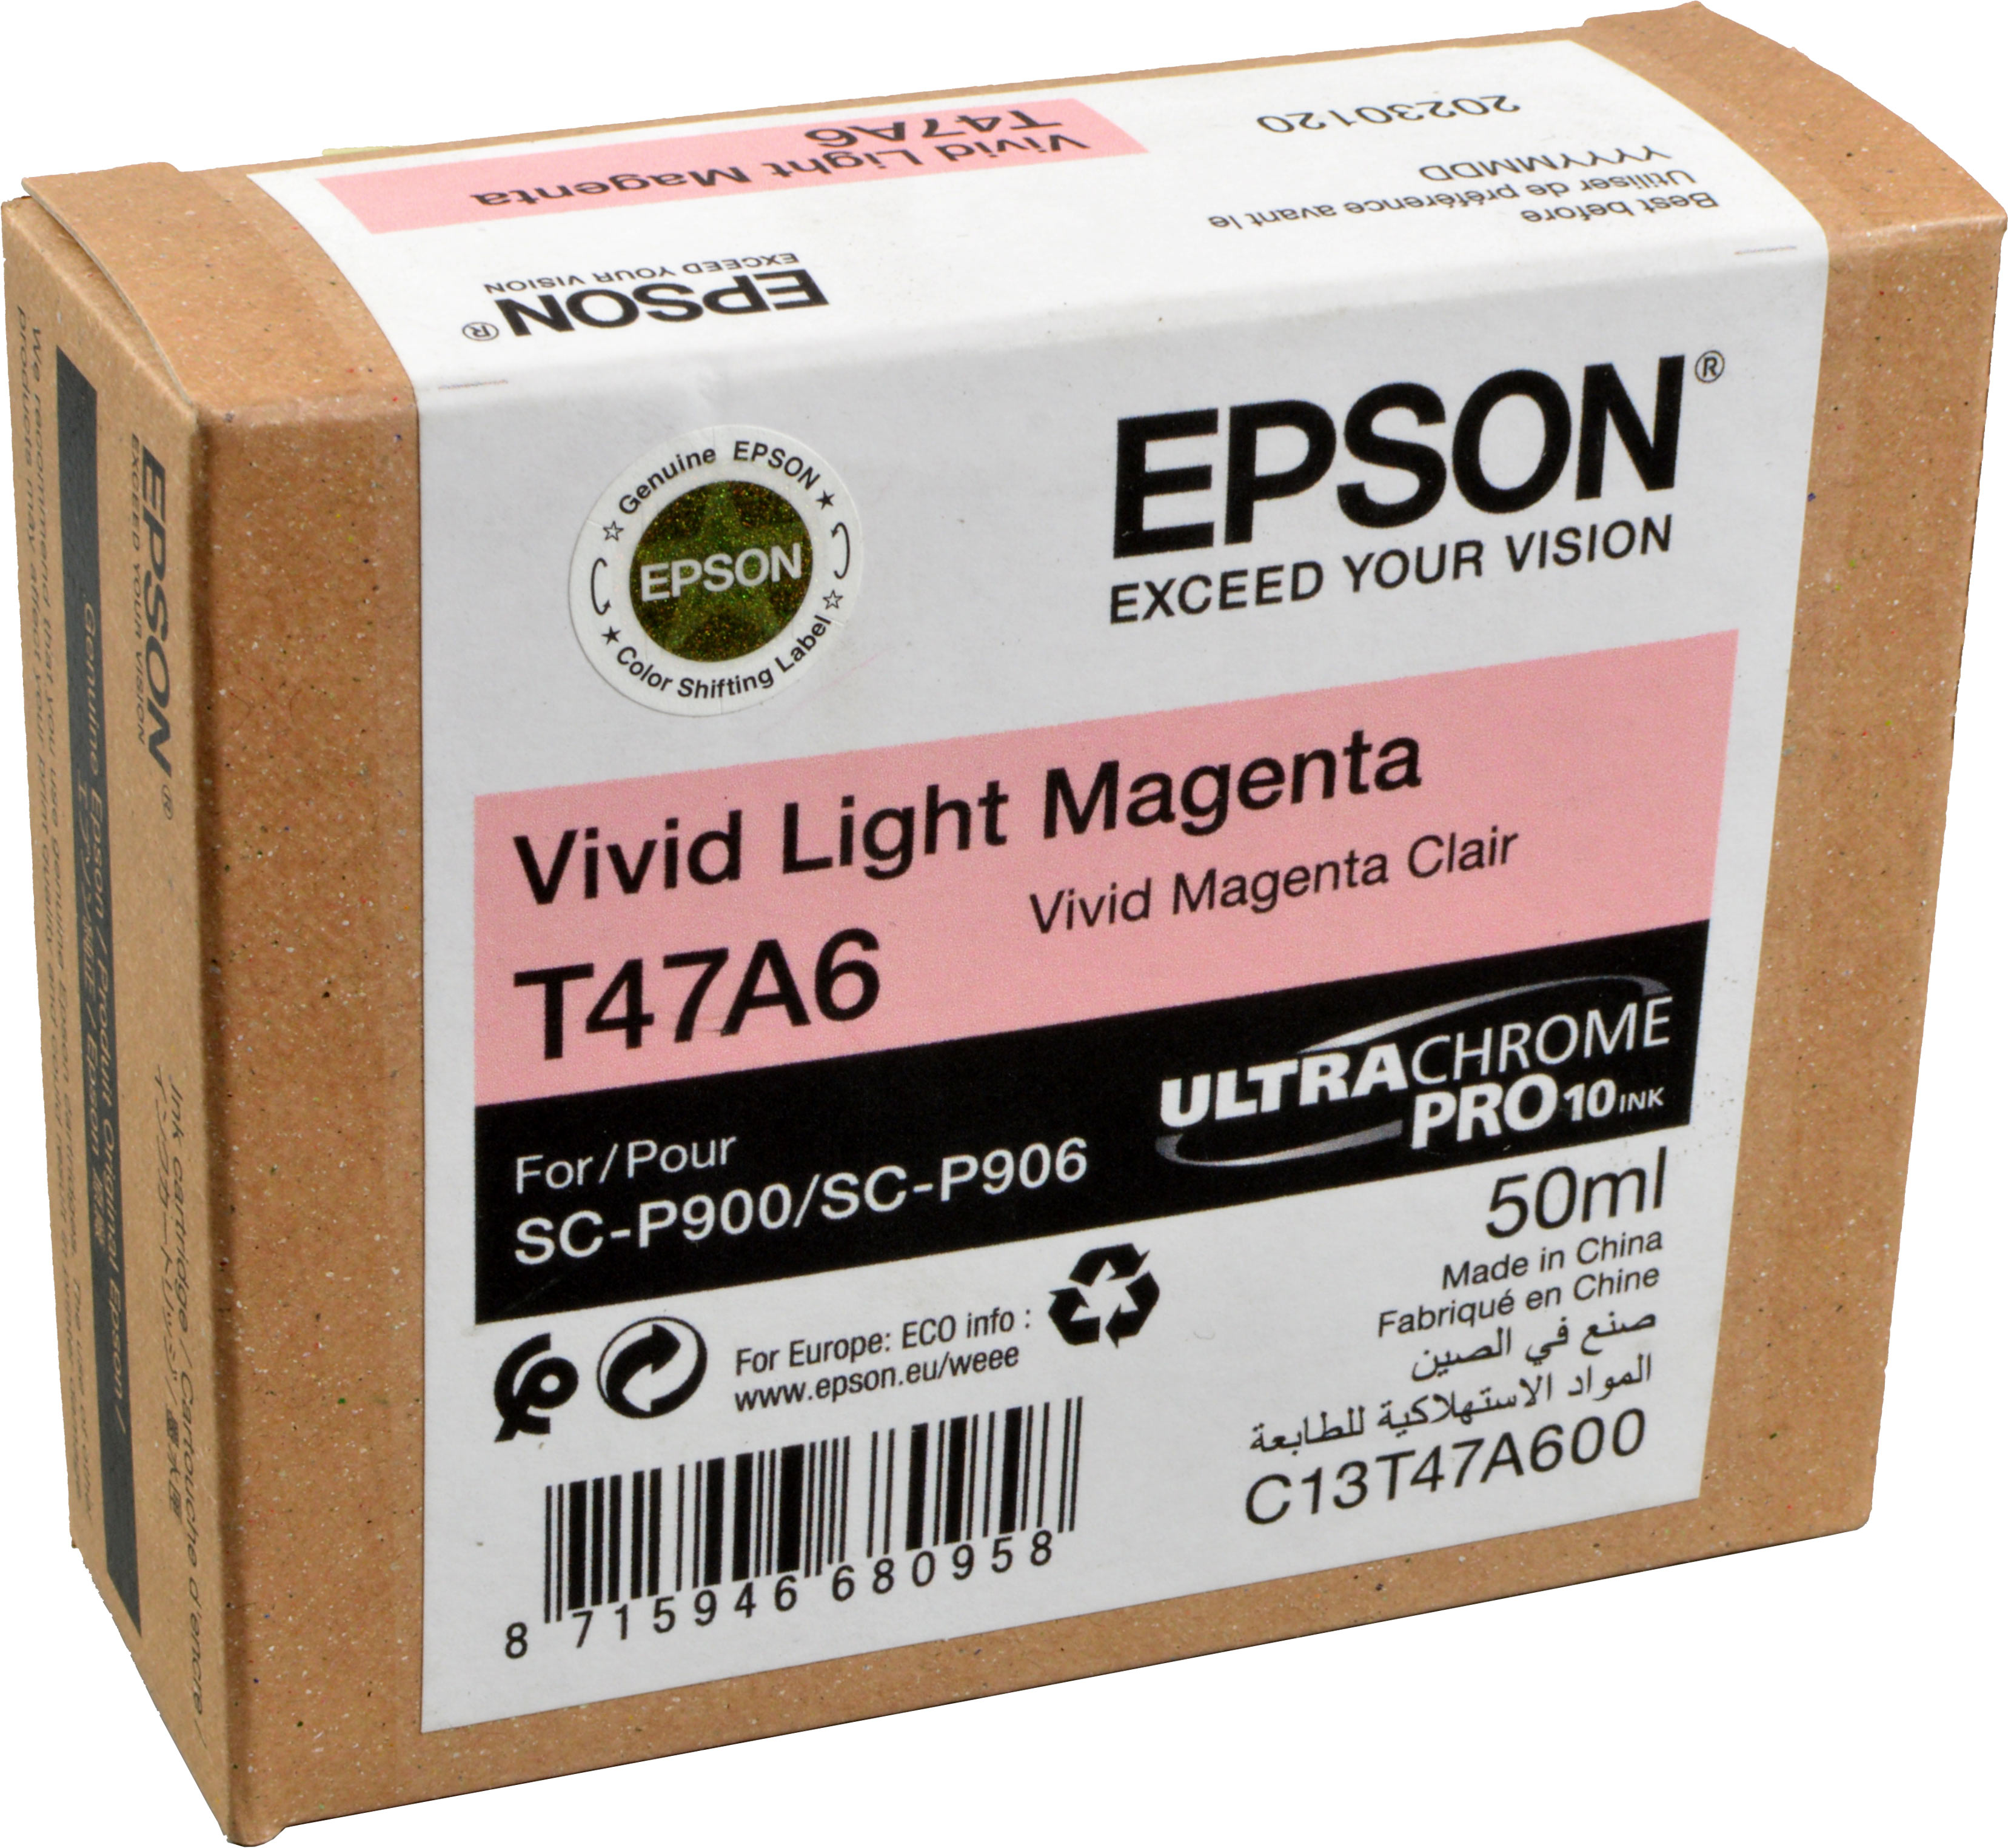 Epson Tinte C13T47A600  T47A6  vivid light magenta